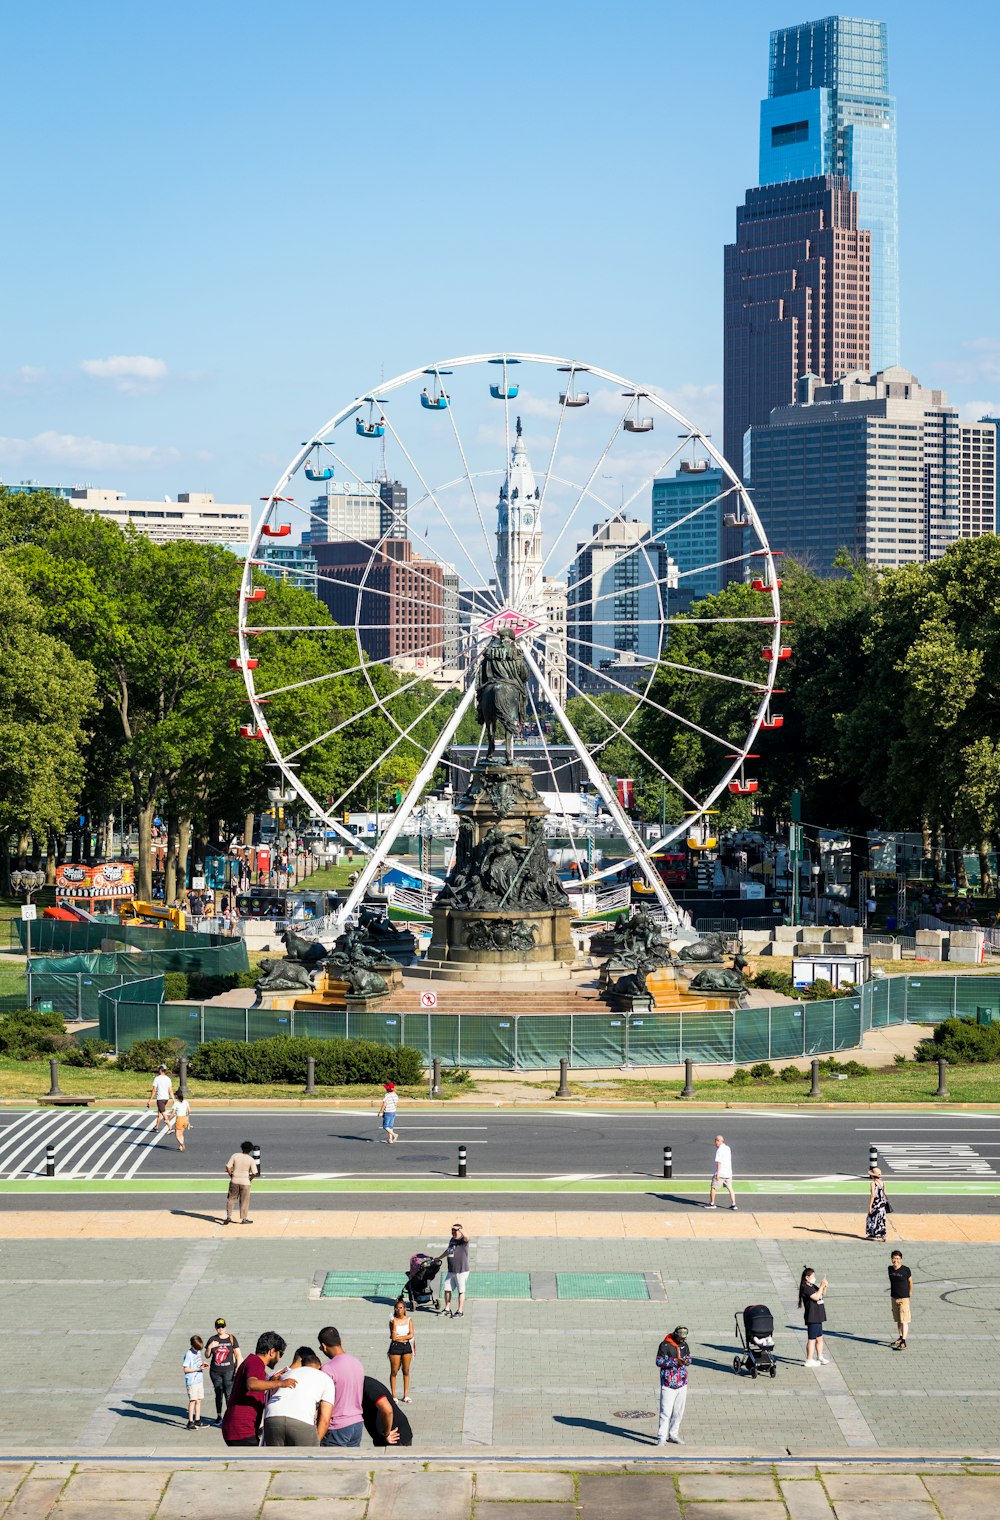 a large ferris wheel in a city